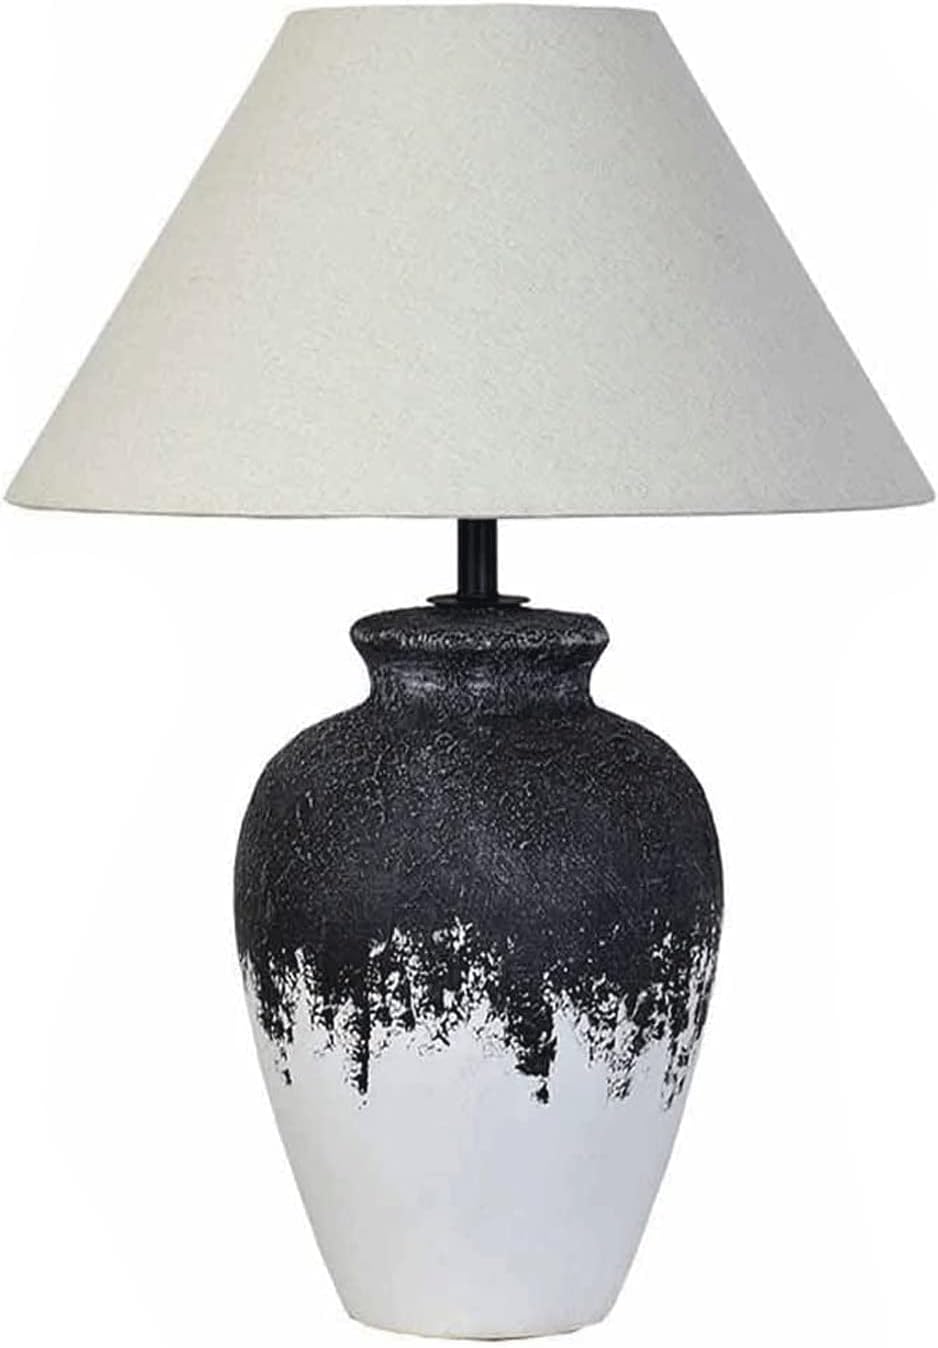 Hdc Ceramic Nightstand Lamp Southwest Clay Pot Gradient Desk Lamp Handmade Textured Shade Bedside Lamp Desk Light